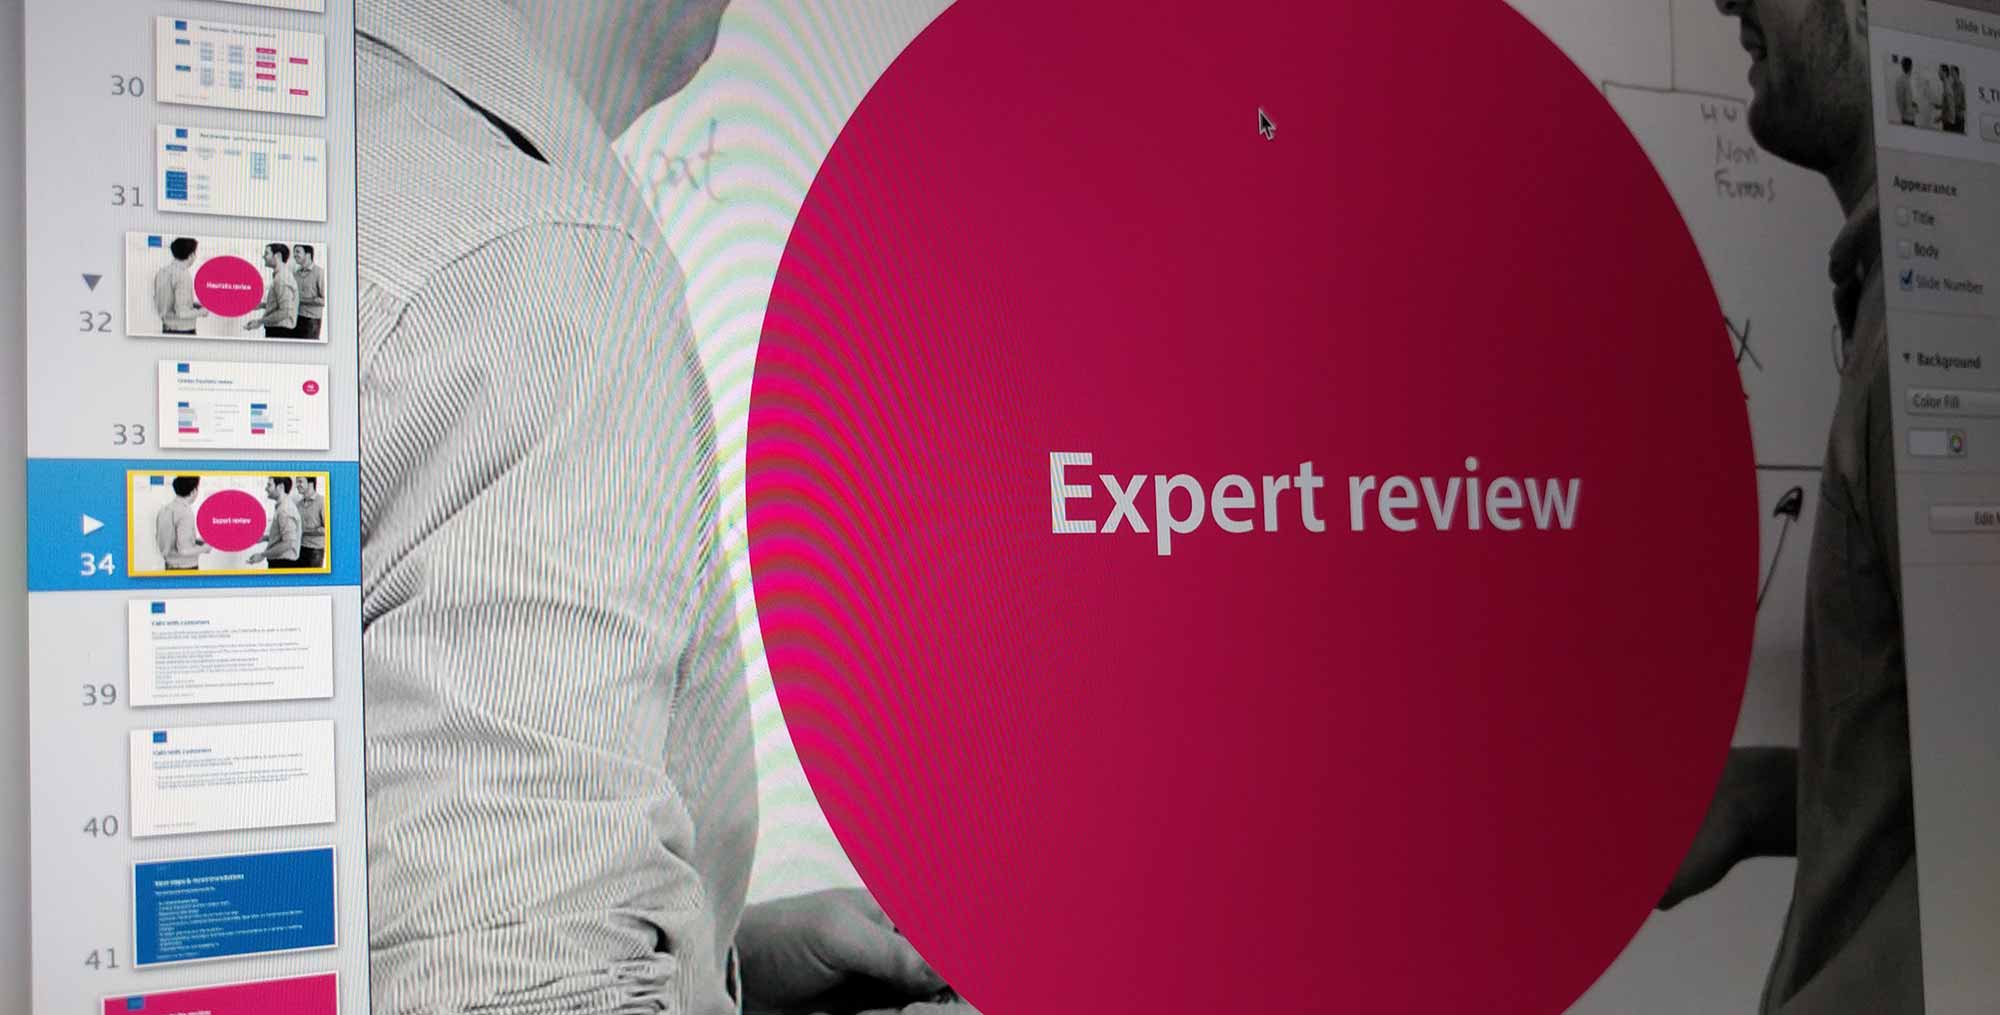 Expert review slides